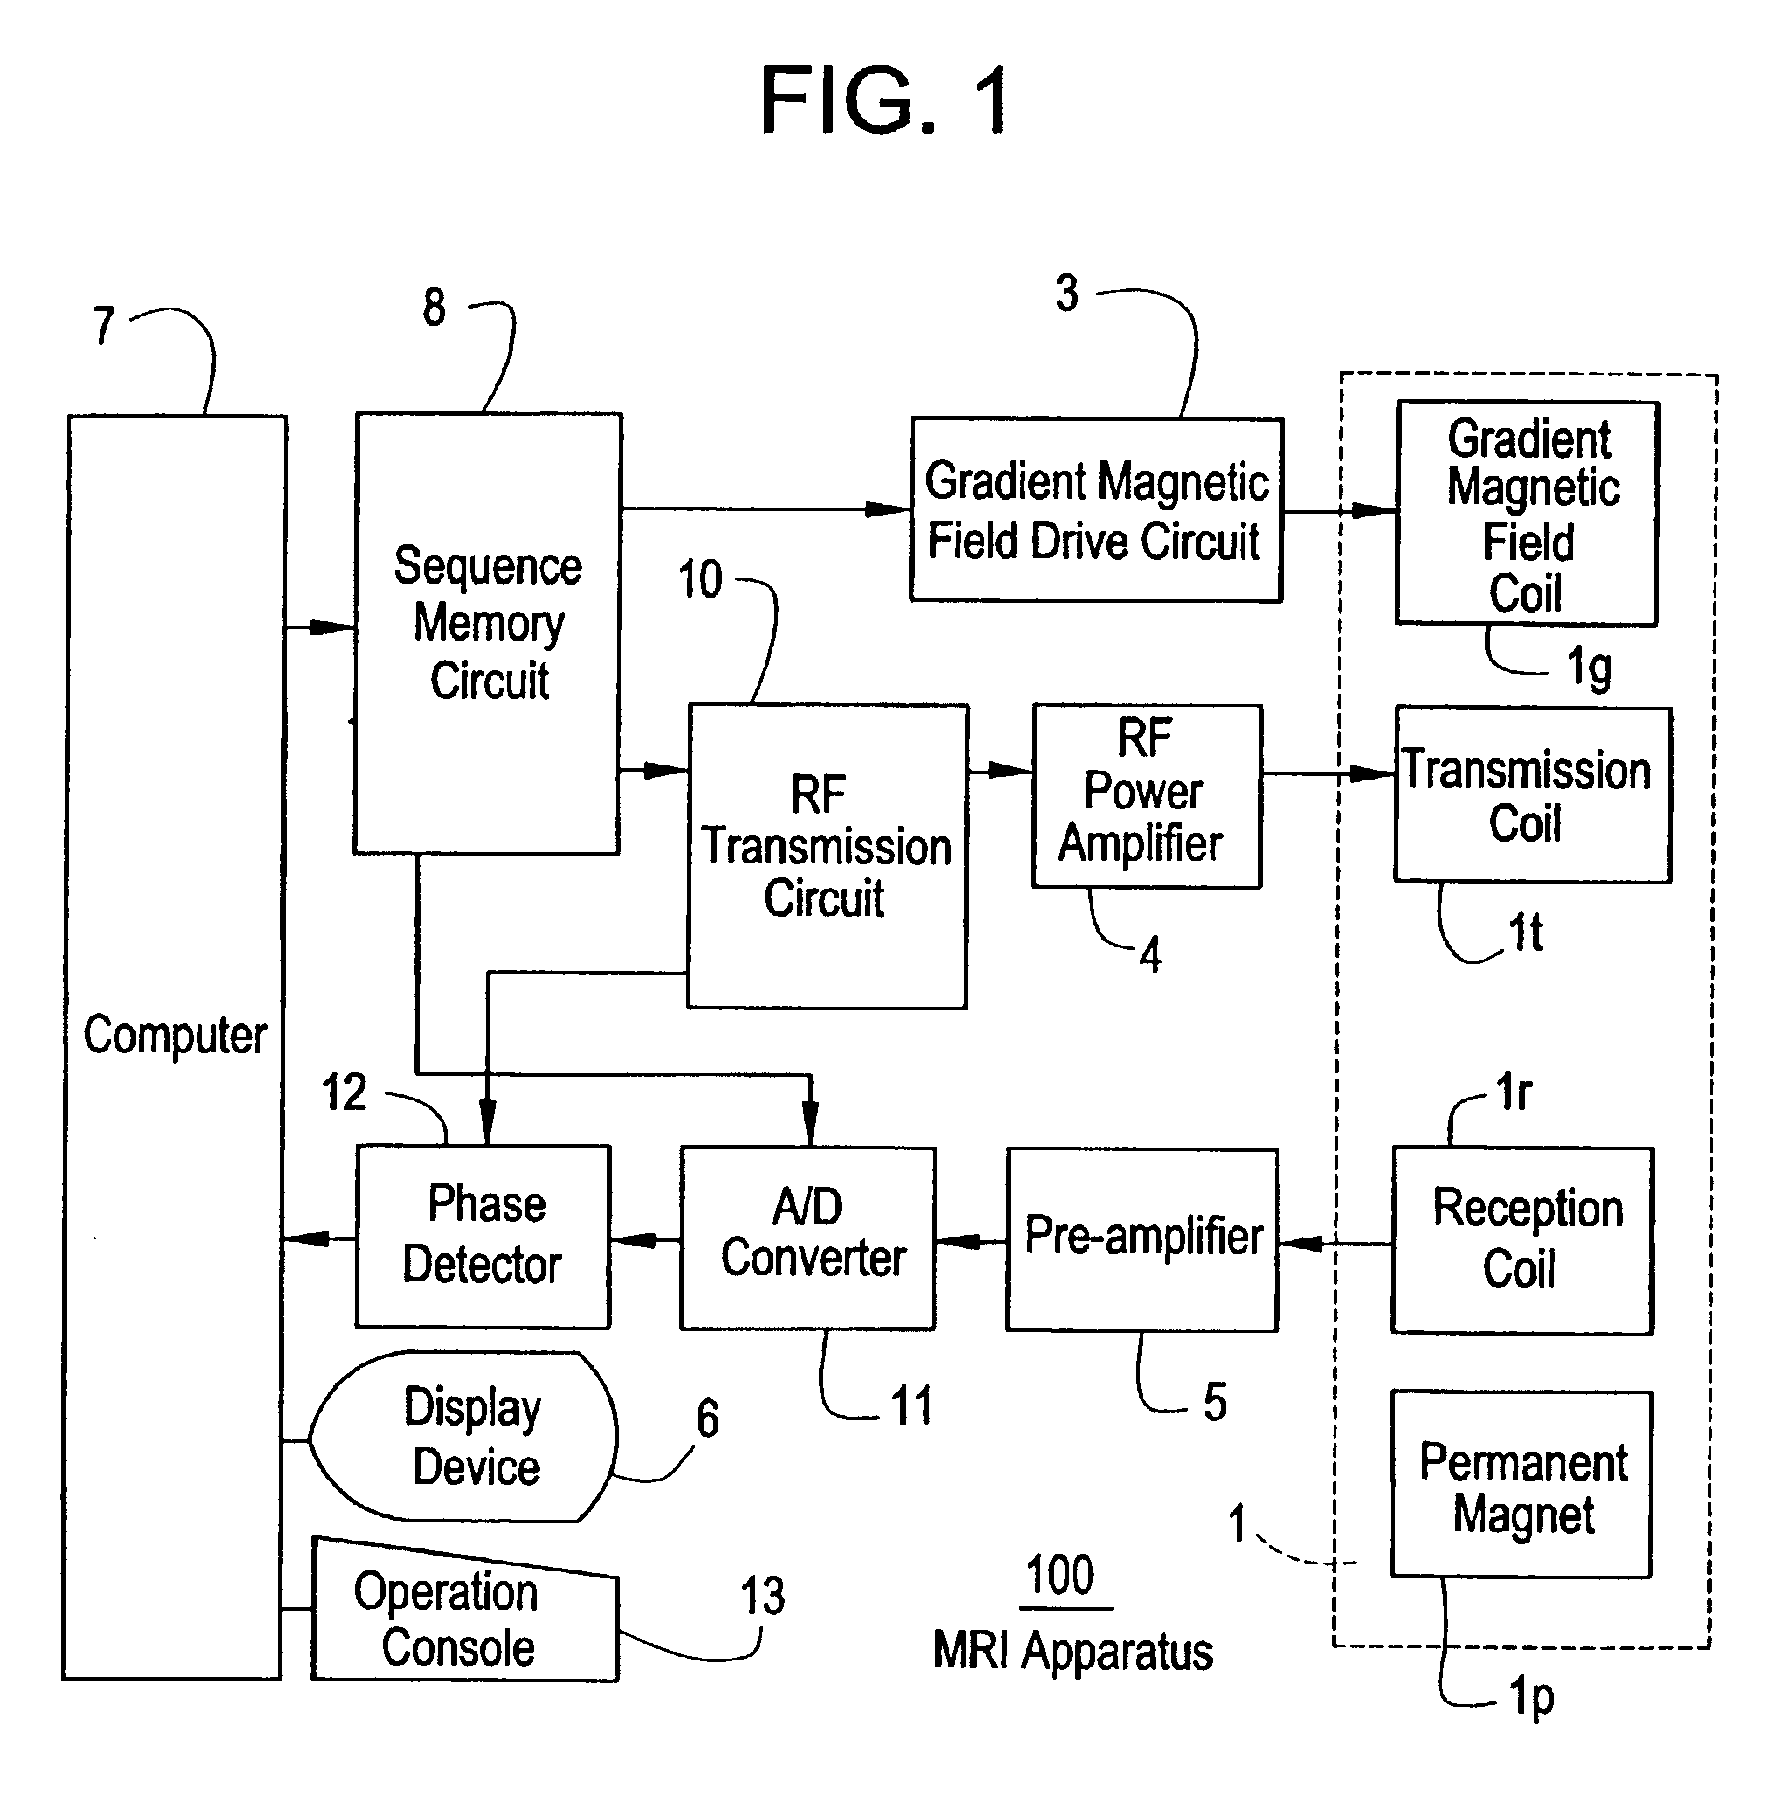 RF transmission circuit, complex digital synthesizer, and MRI apparatus